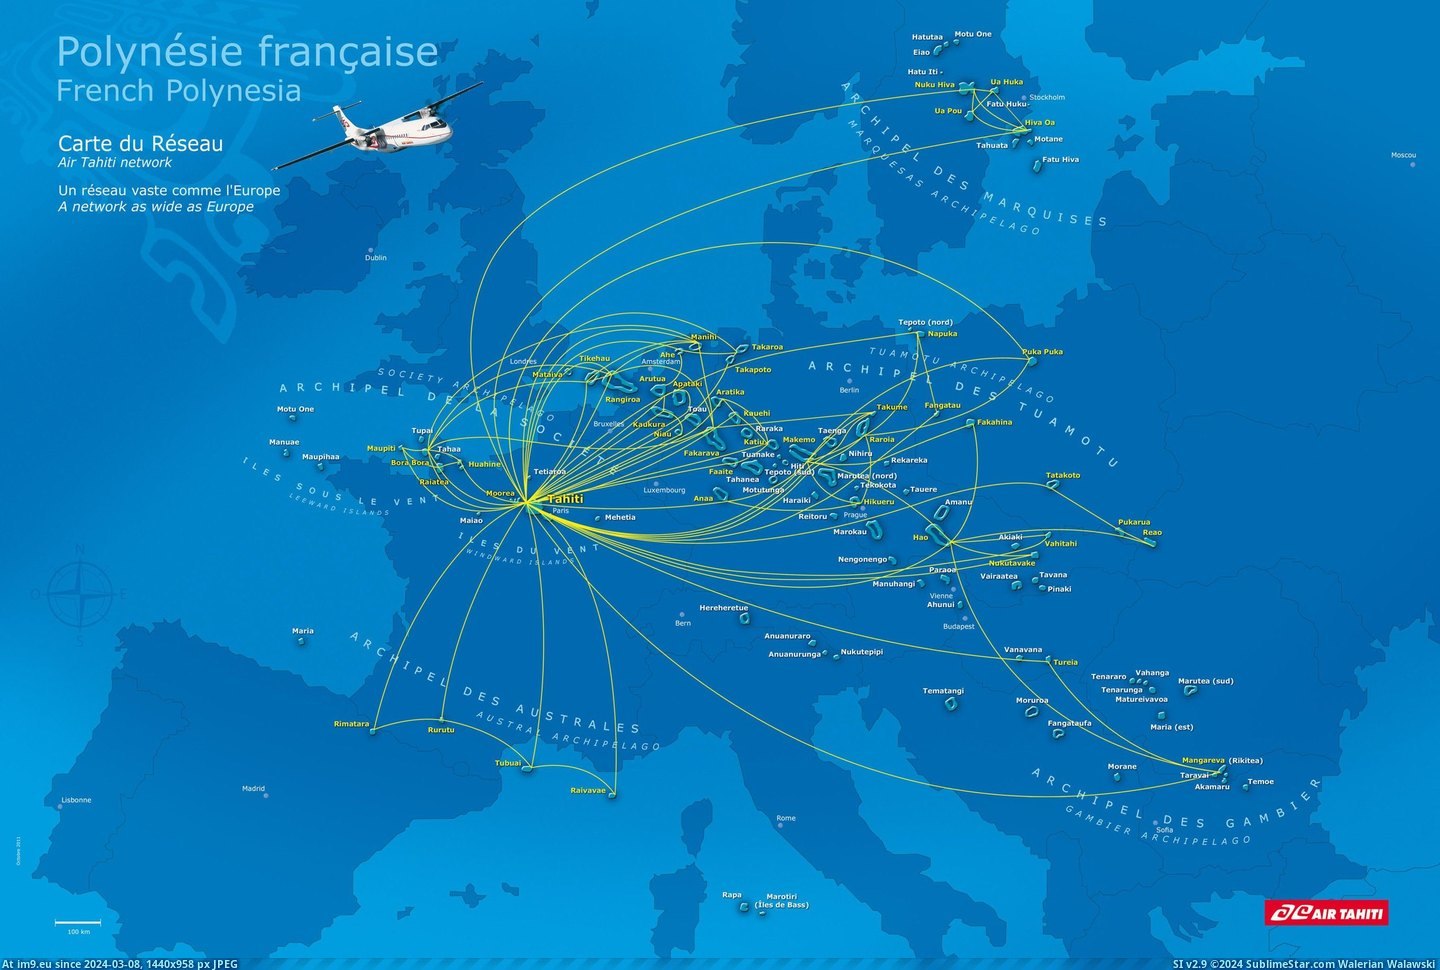 #French #Comparison #Polynesia #Europe [Mapporn] French Polynesia with Europe for comparison. [2717x1820] Pic. (Bild von album My r/MAPS favs))